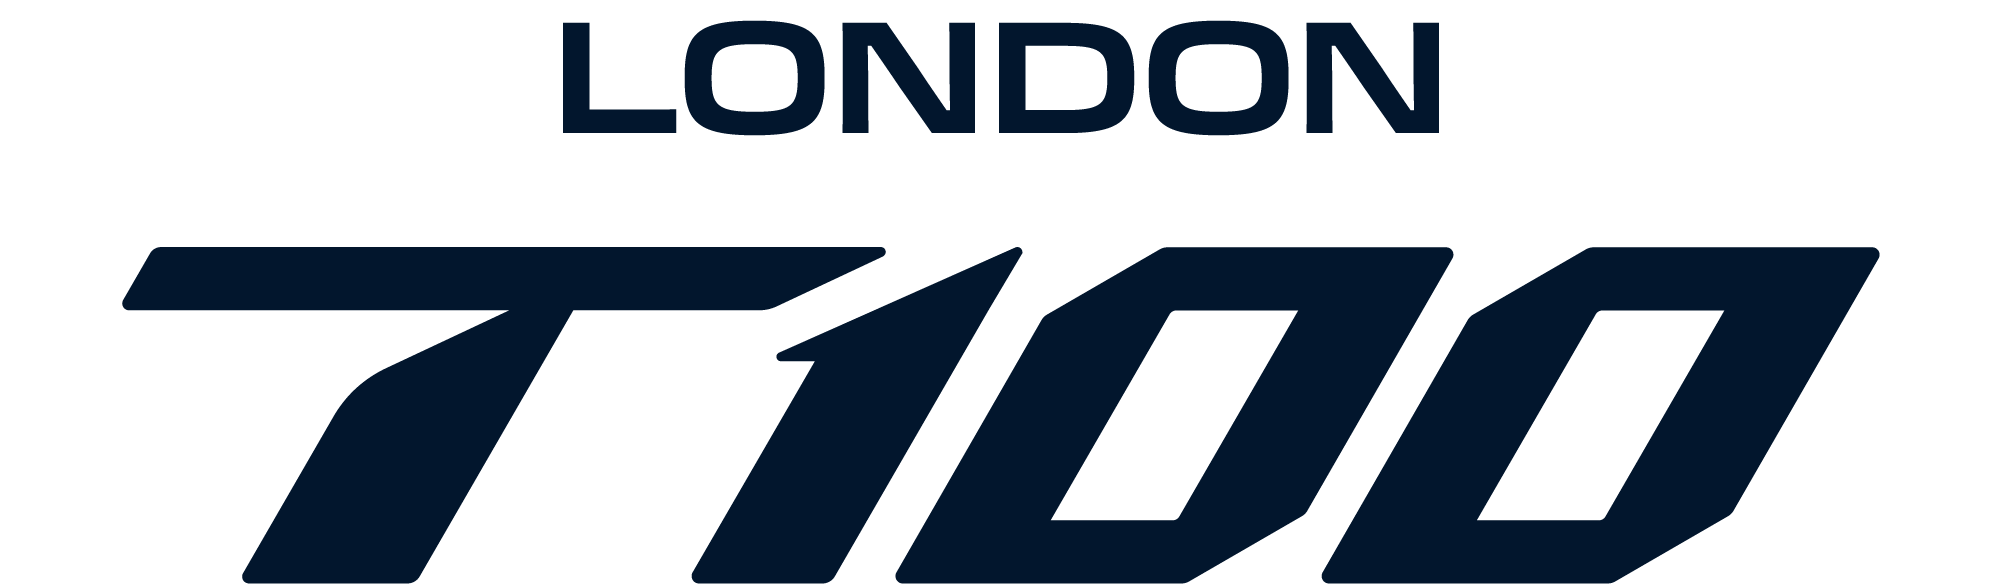 London T100 - 100Km